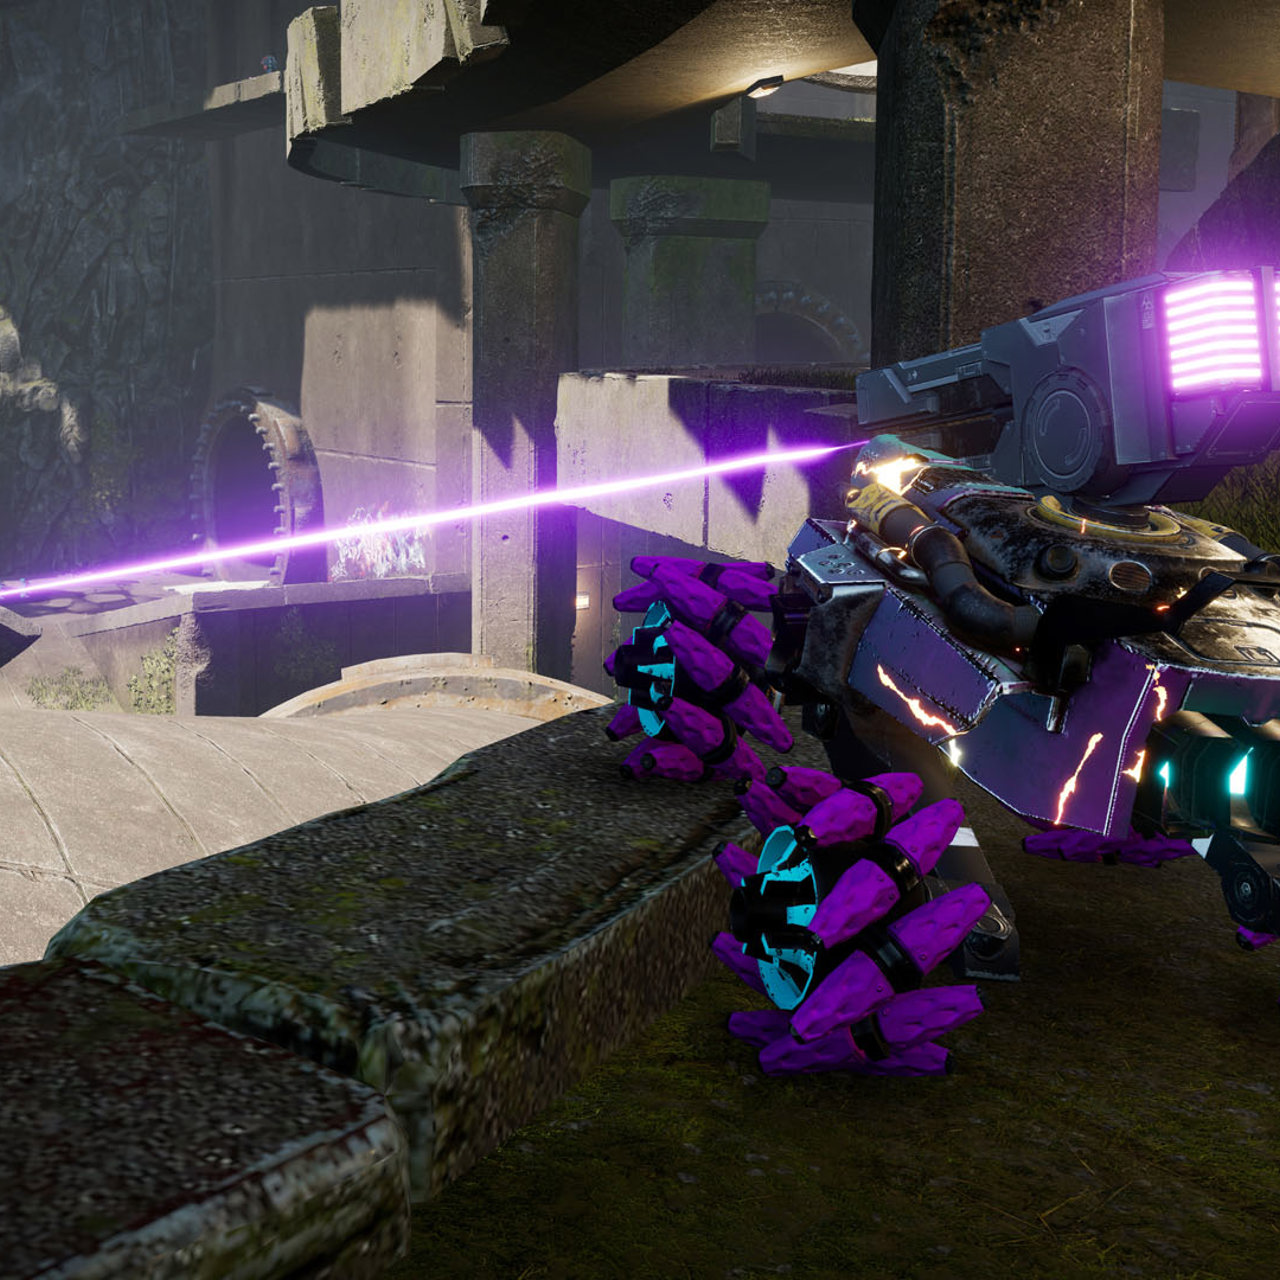 Game screenshot of a purple vehicle firing a lazer type weapon